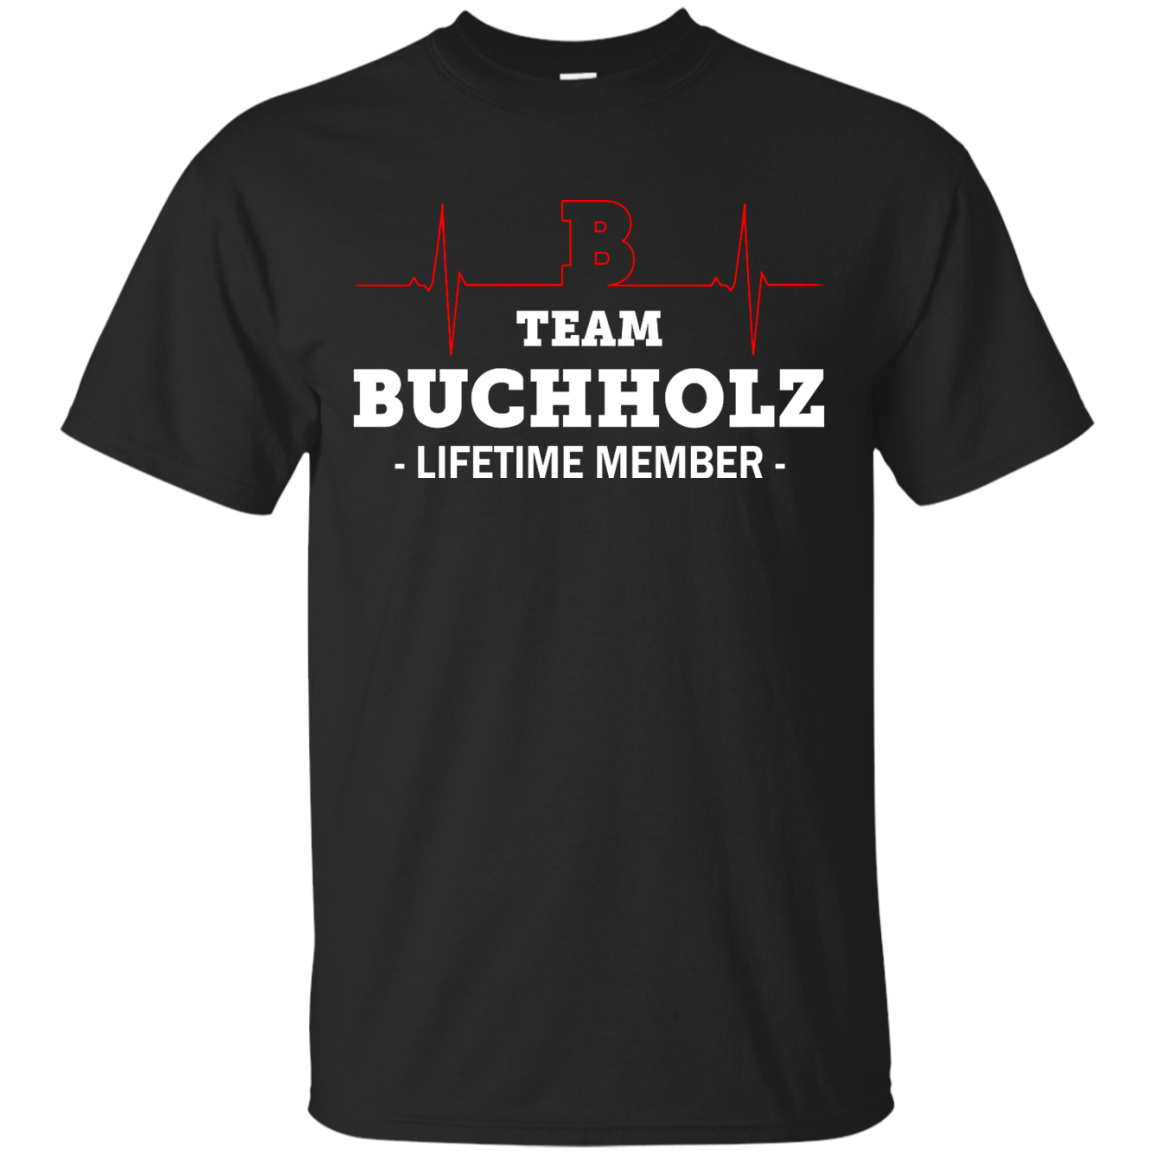 Team Buchholz lifetime remember shirt, hoodie, tank